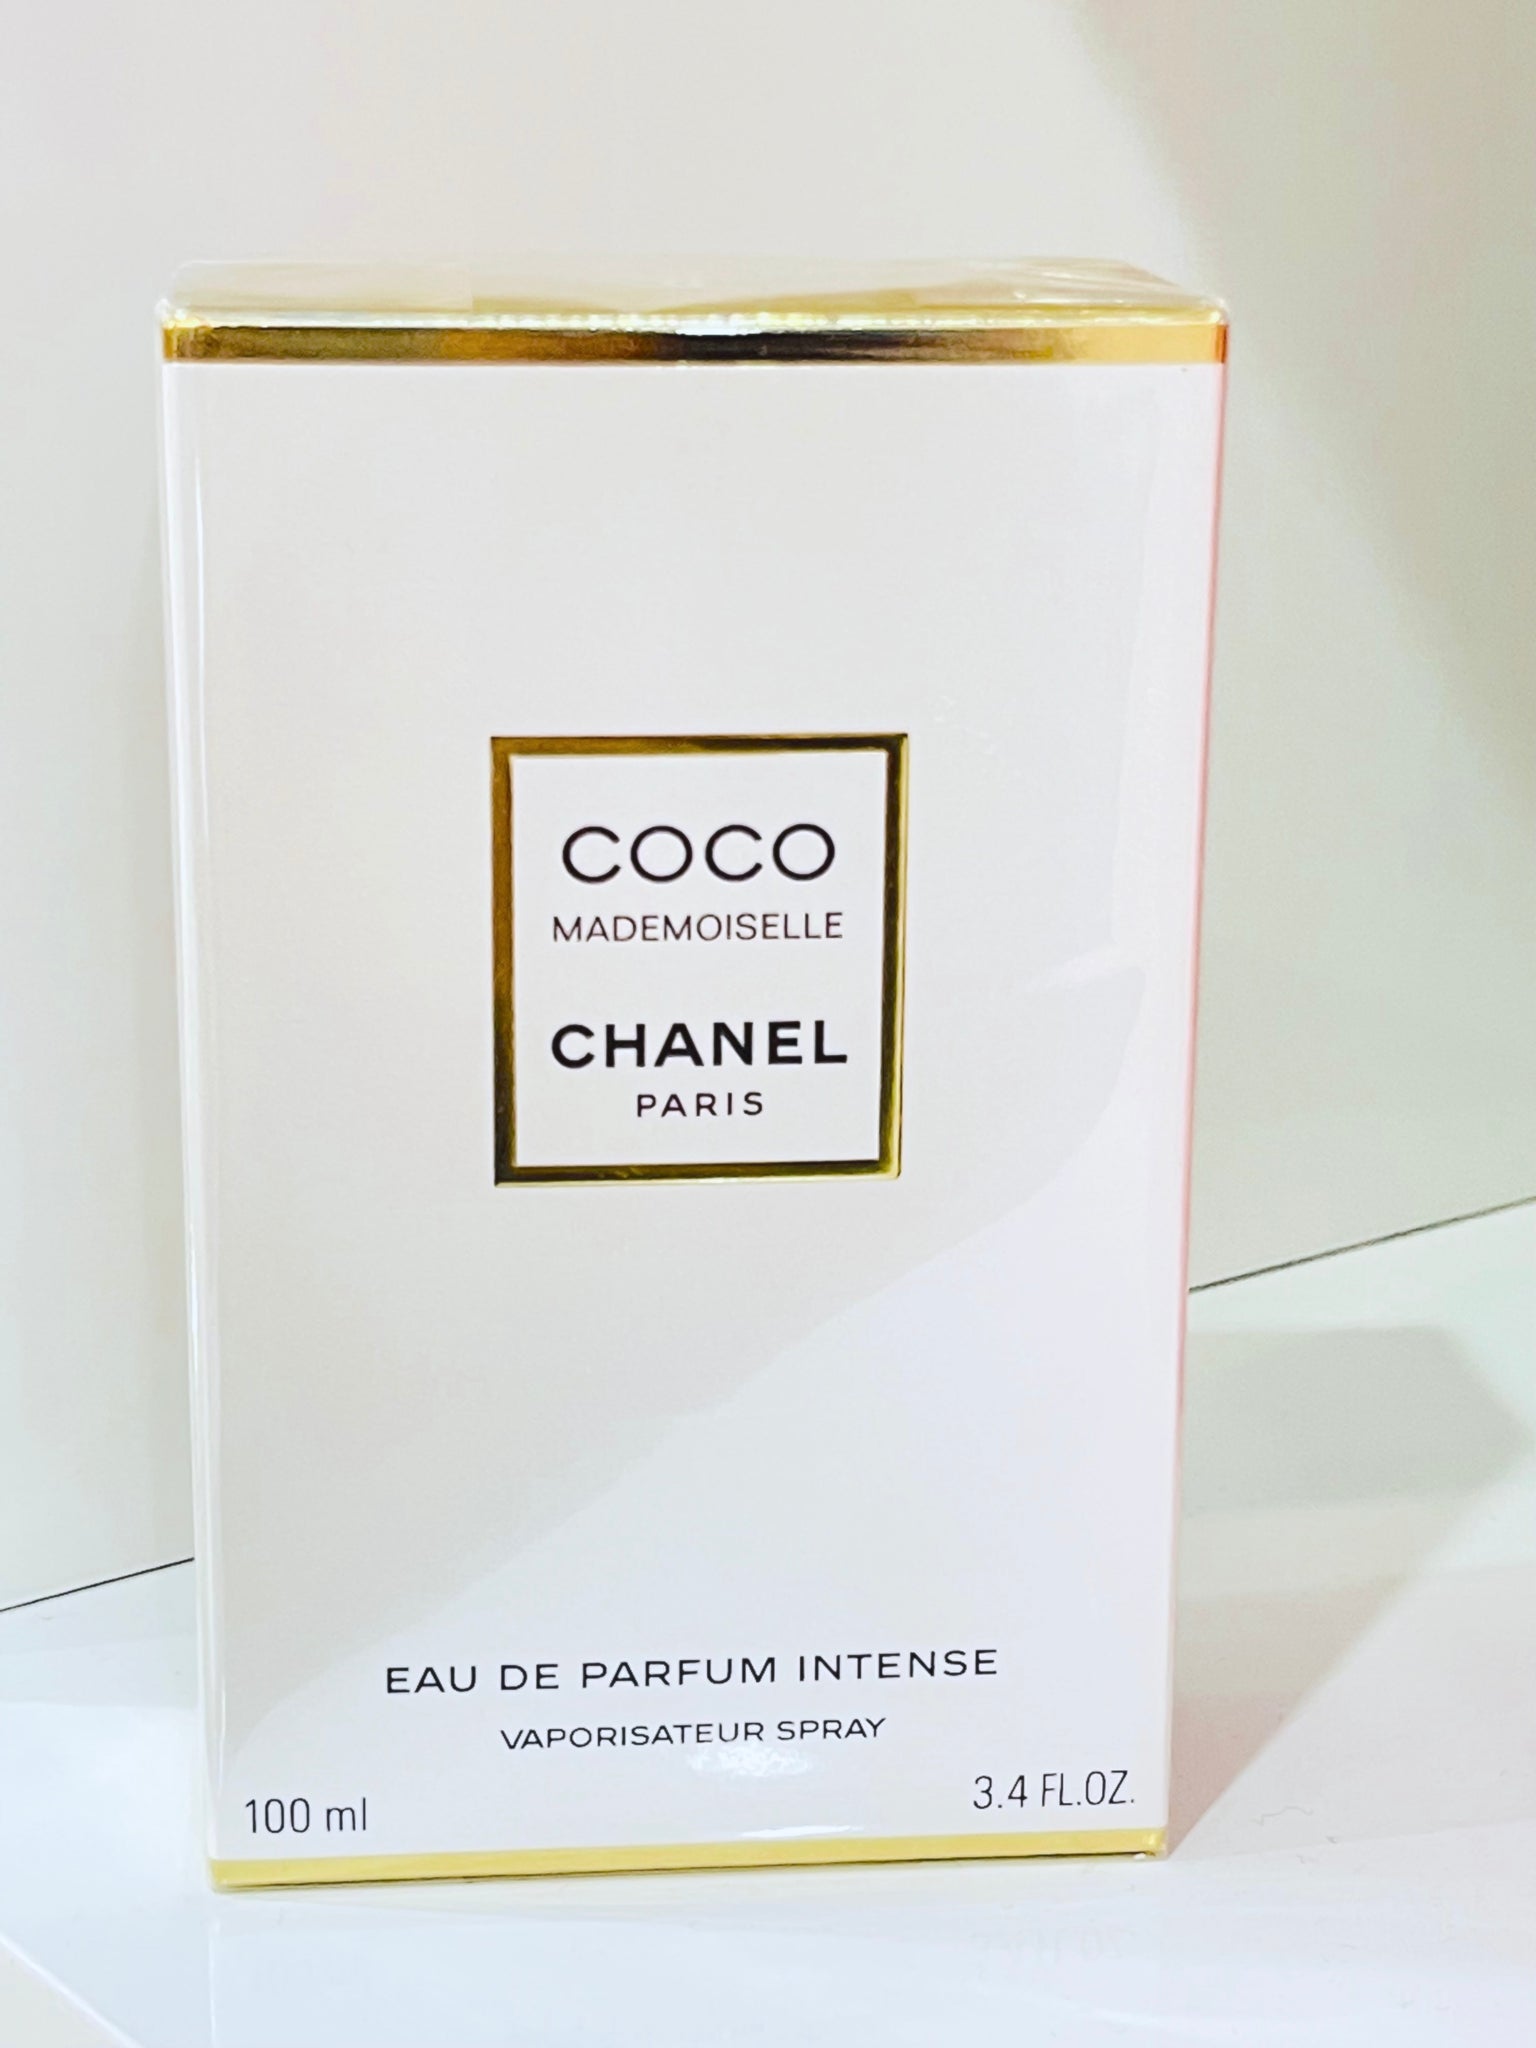 CHANEL Coco Mademoiselle EAU DE Parfume INTENSE 100ml / 3.4oz SEALED BOX